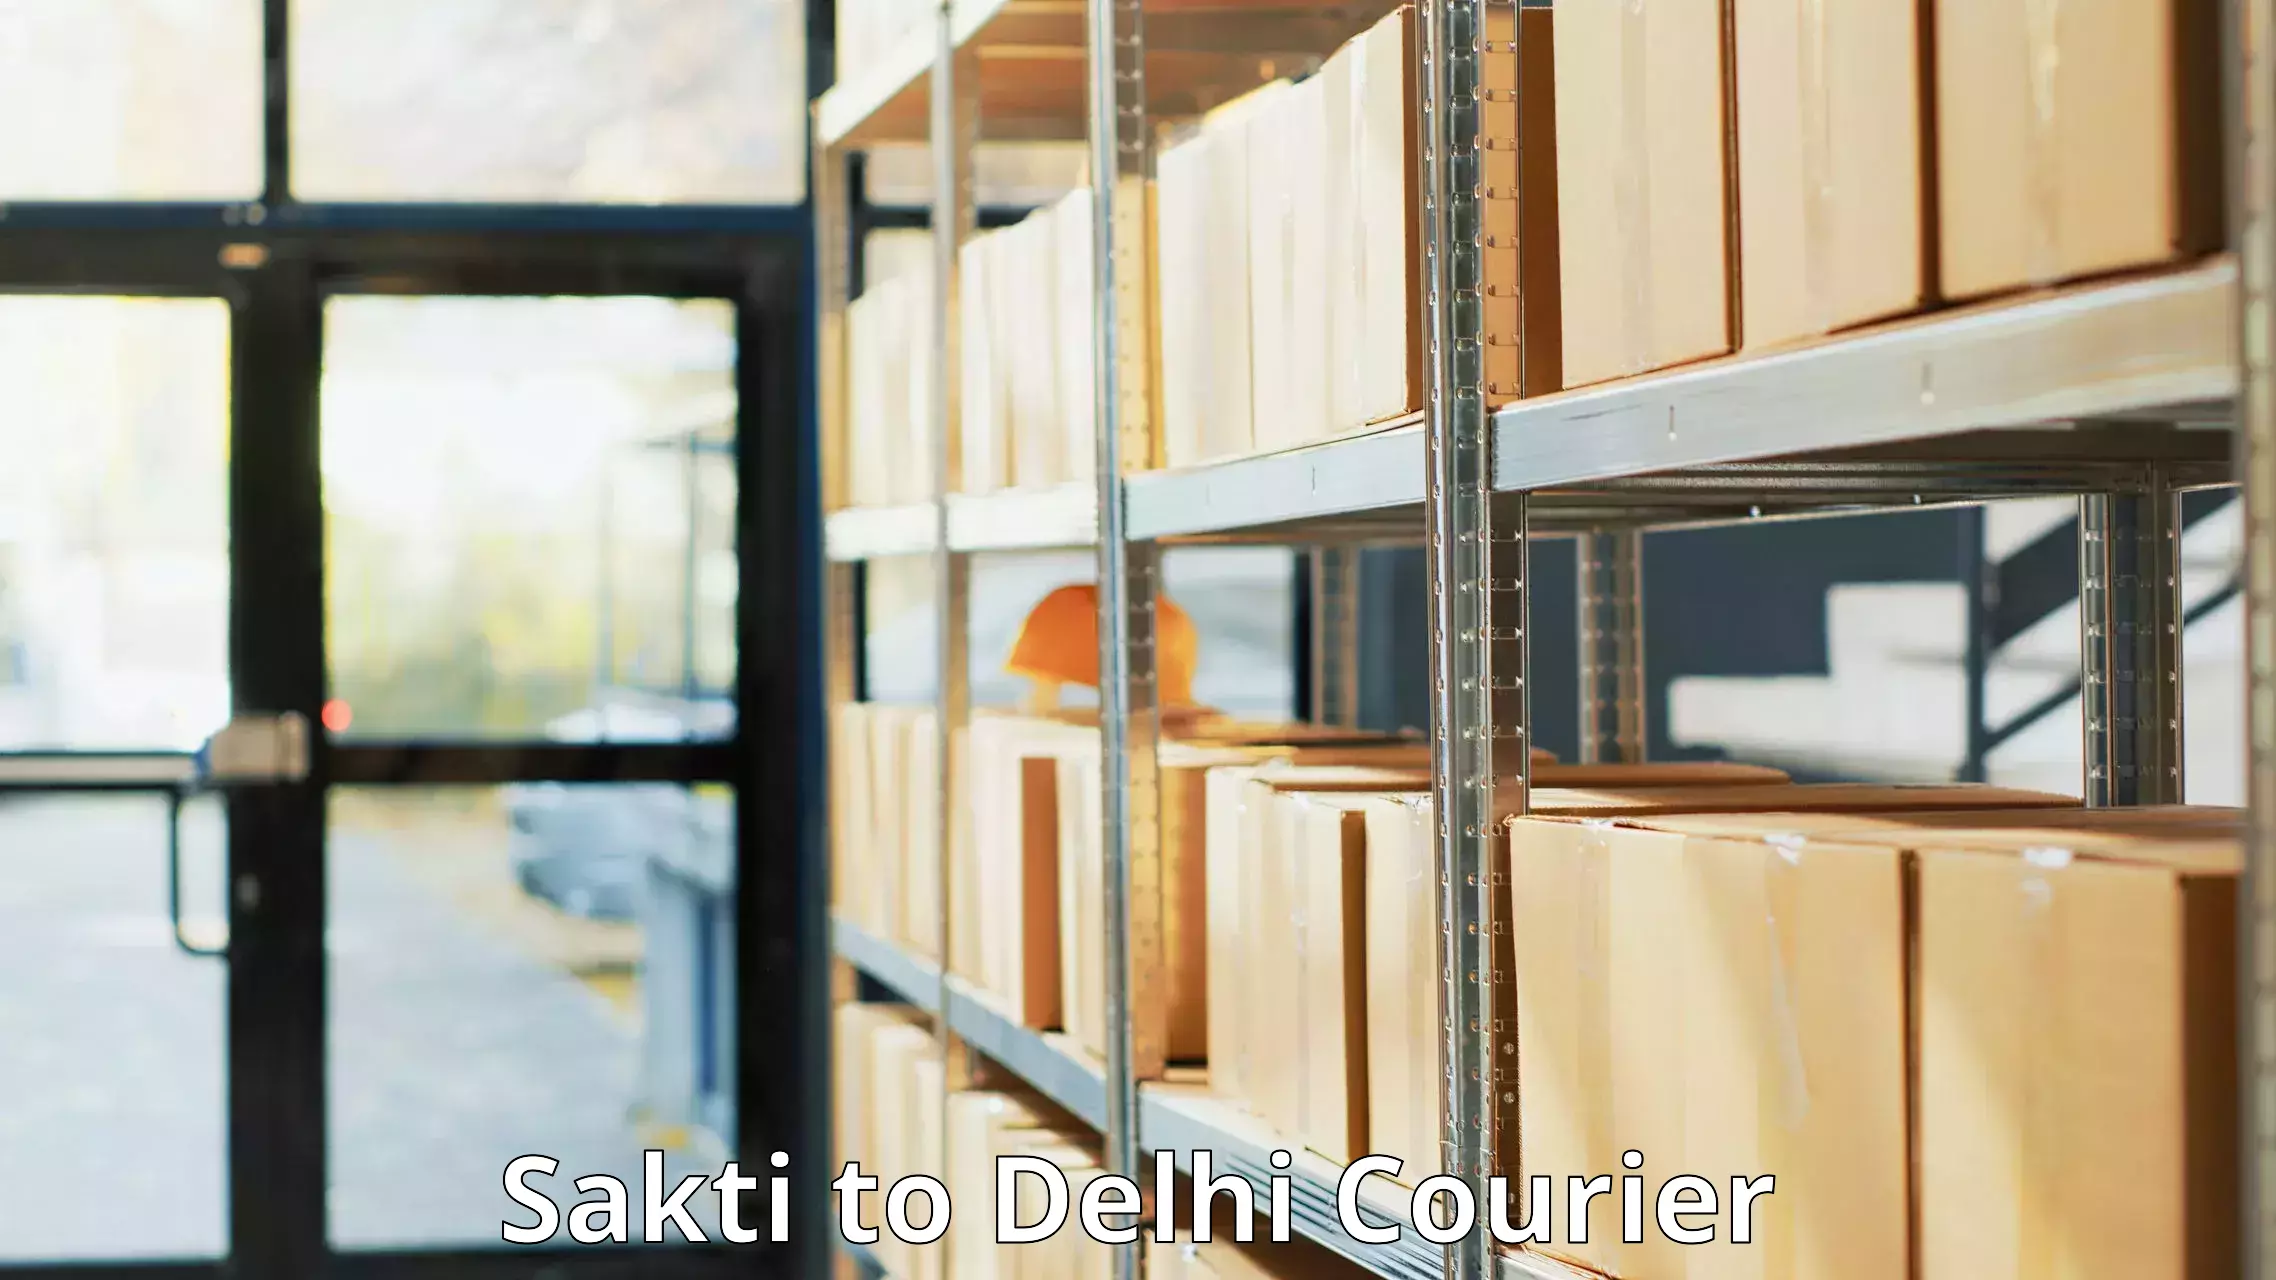 Sustainable delivery practices Sakti to Krishna Nagar